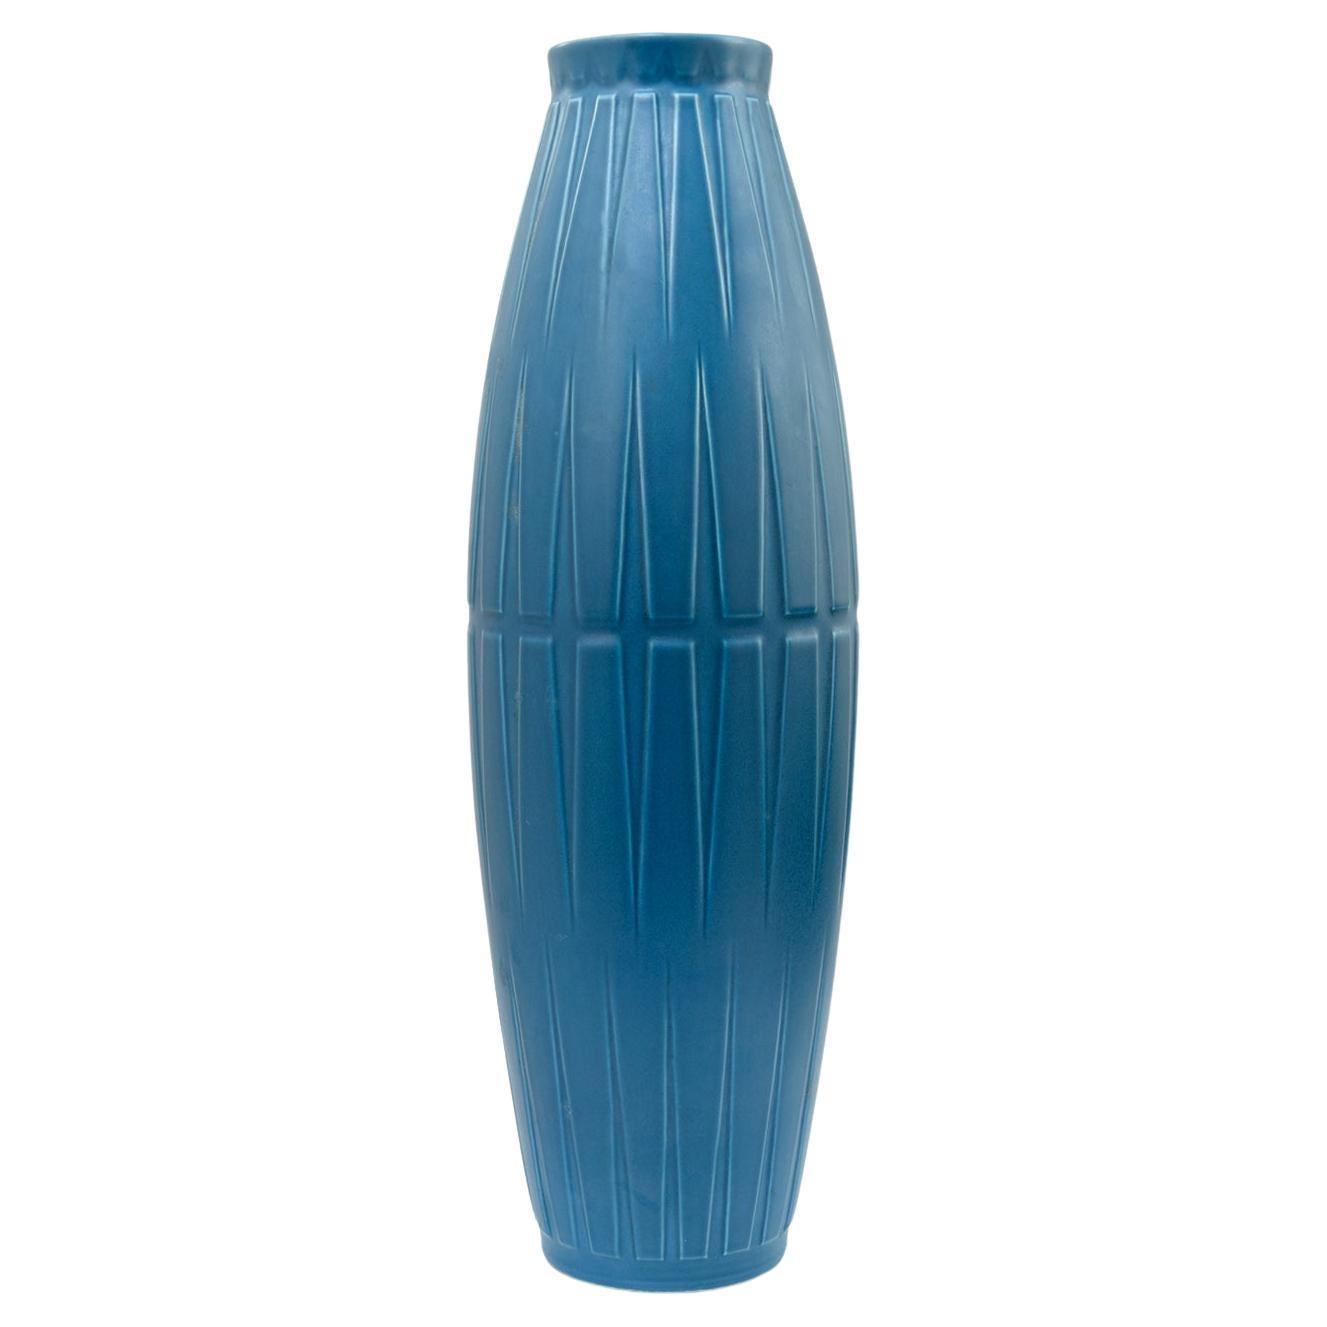 Bo Fajans tall blue ceramic vase with geometric pattern in relief, Sweden, 1940